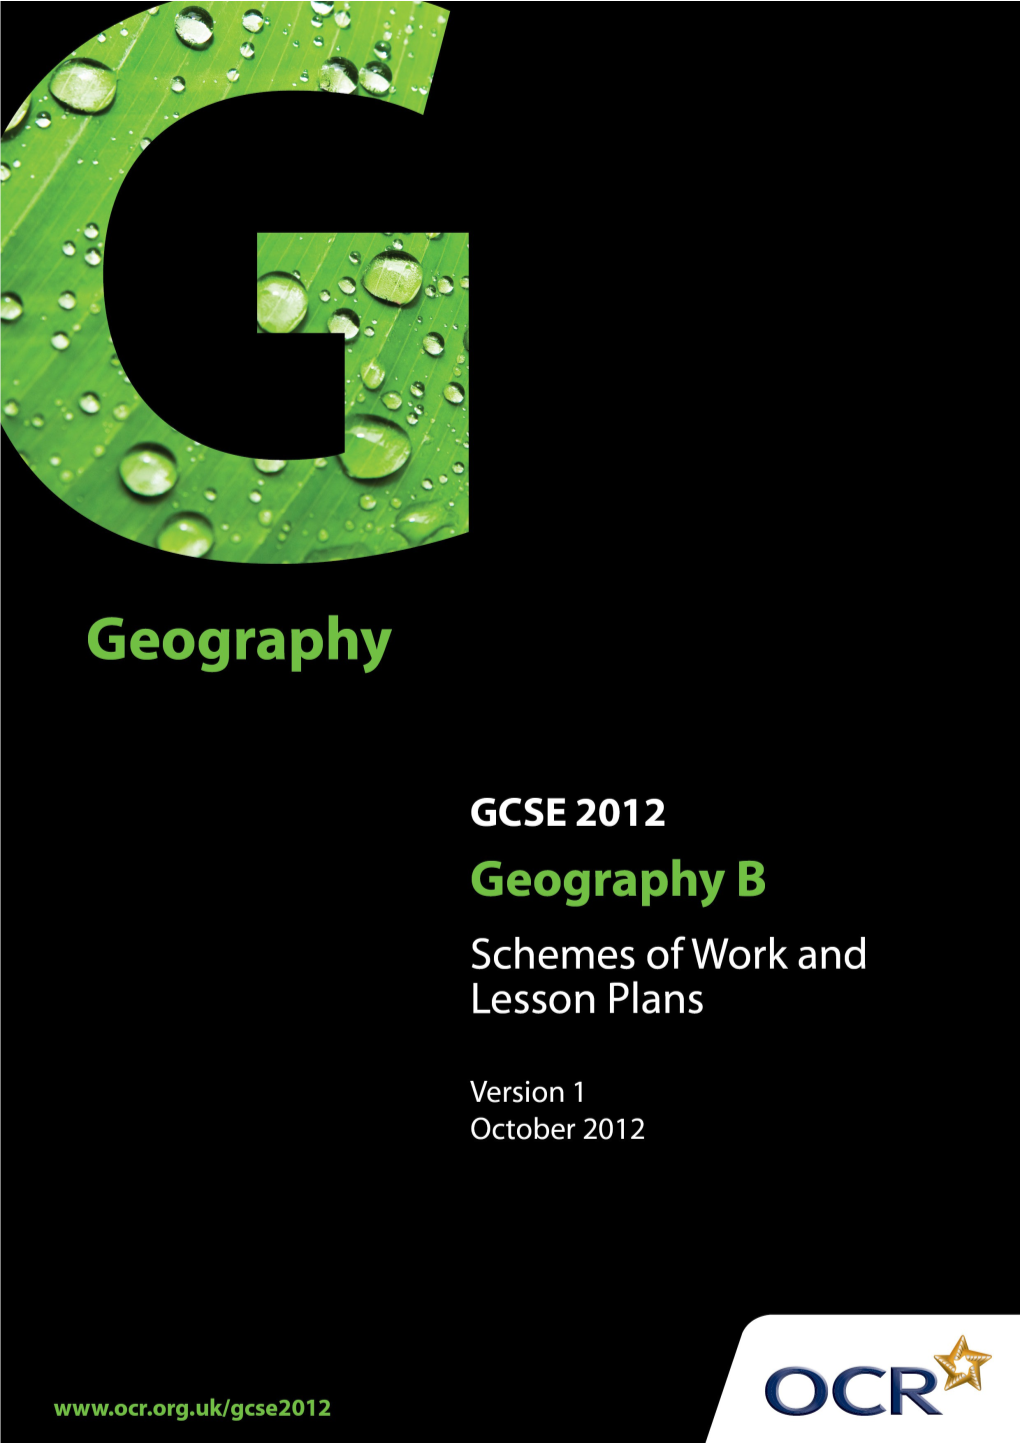 Sample Lesson Plan: OCR GCSE Geogrpahy B - Economic Development 15